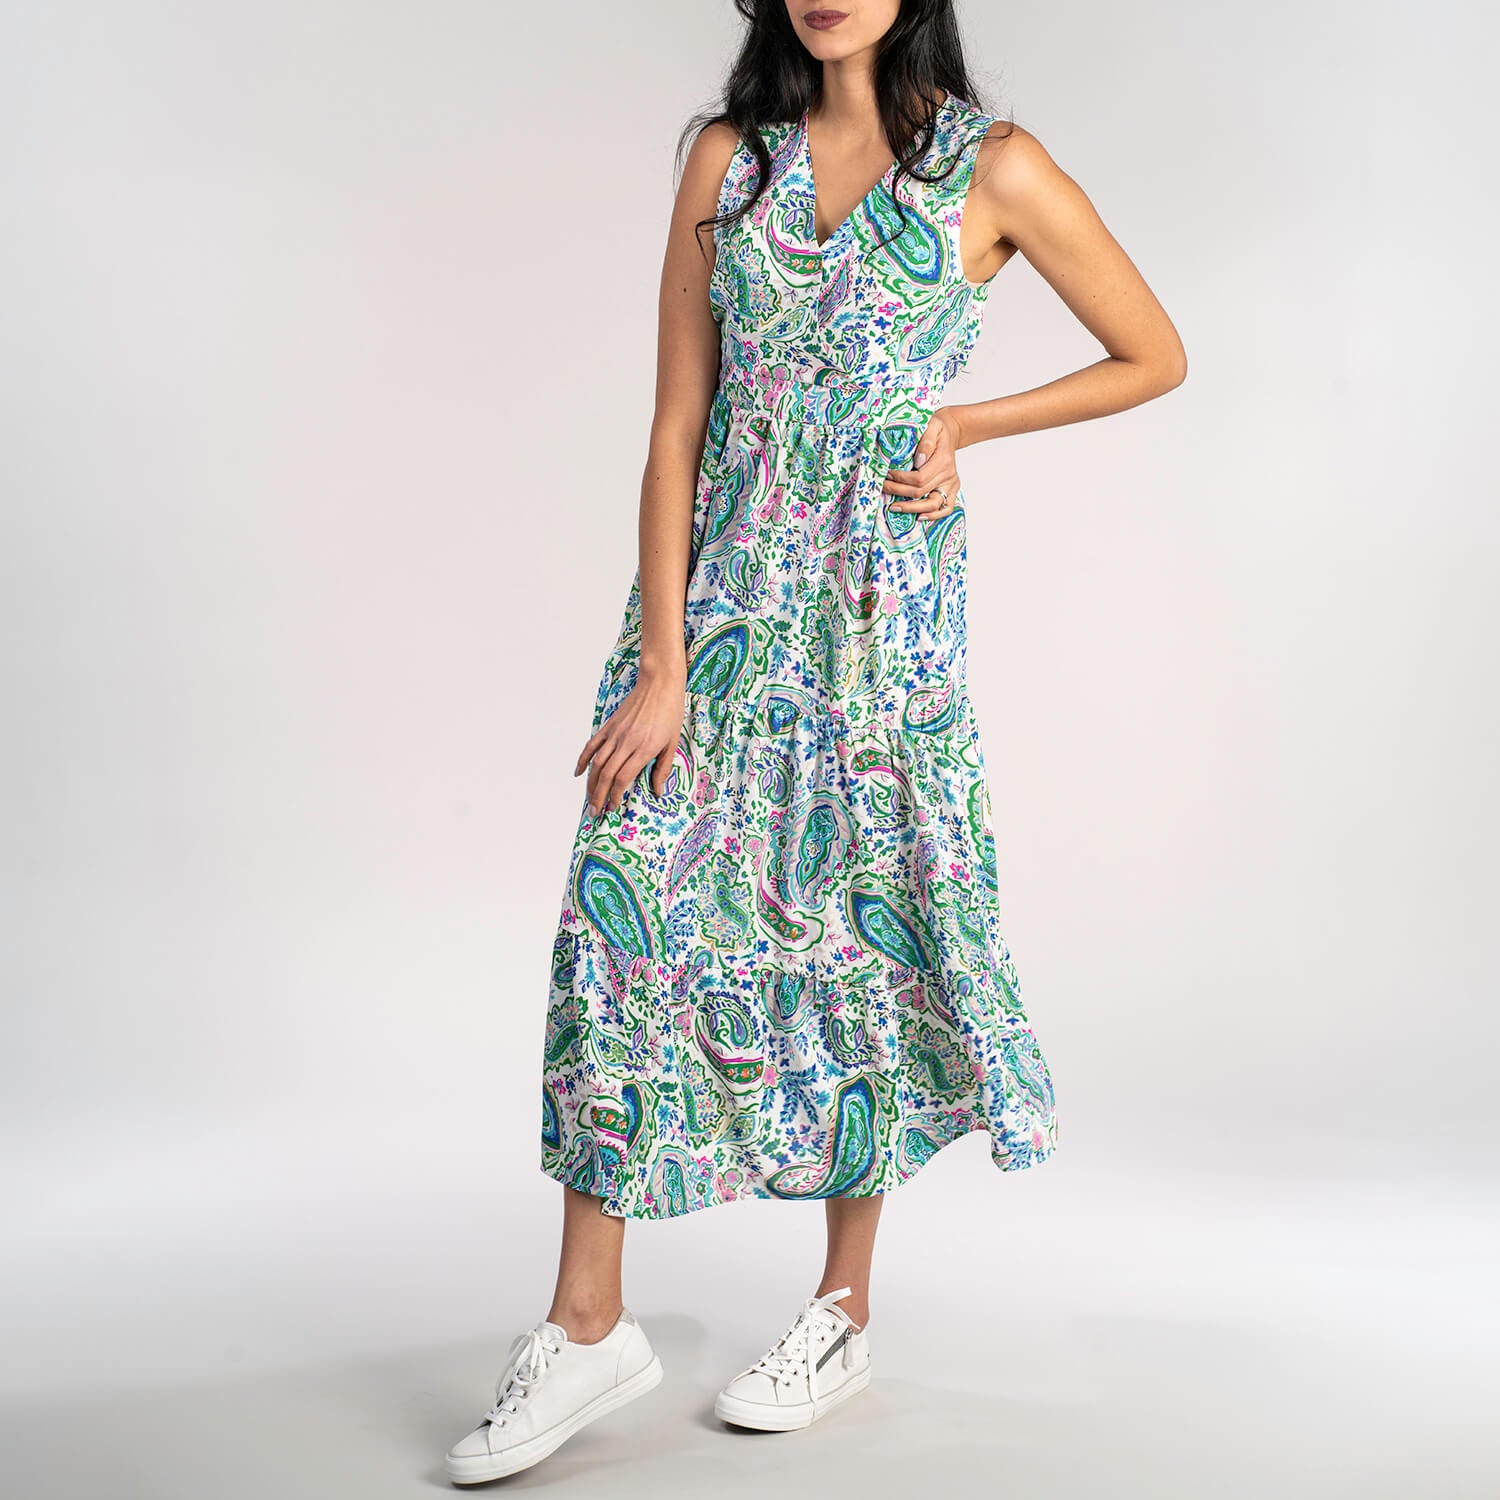 Naoise V Neck Sleeveless Dress - Green/Blue 1 Shaws Department Stores